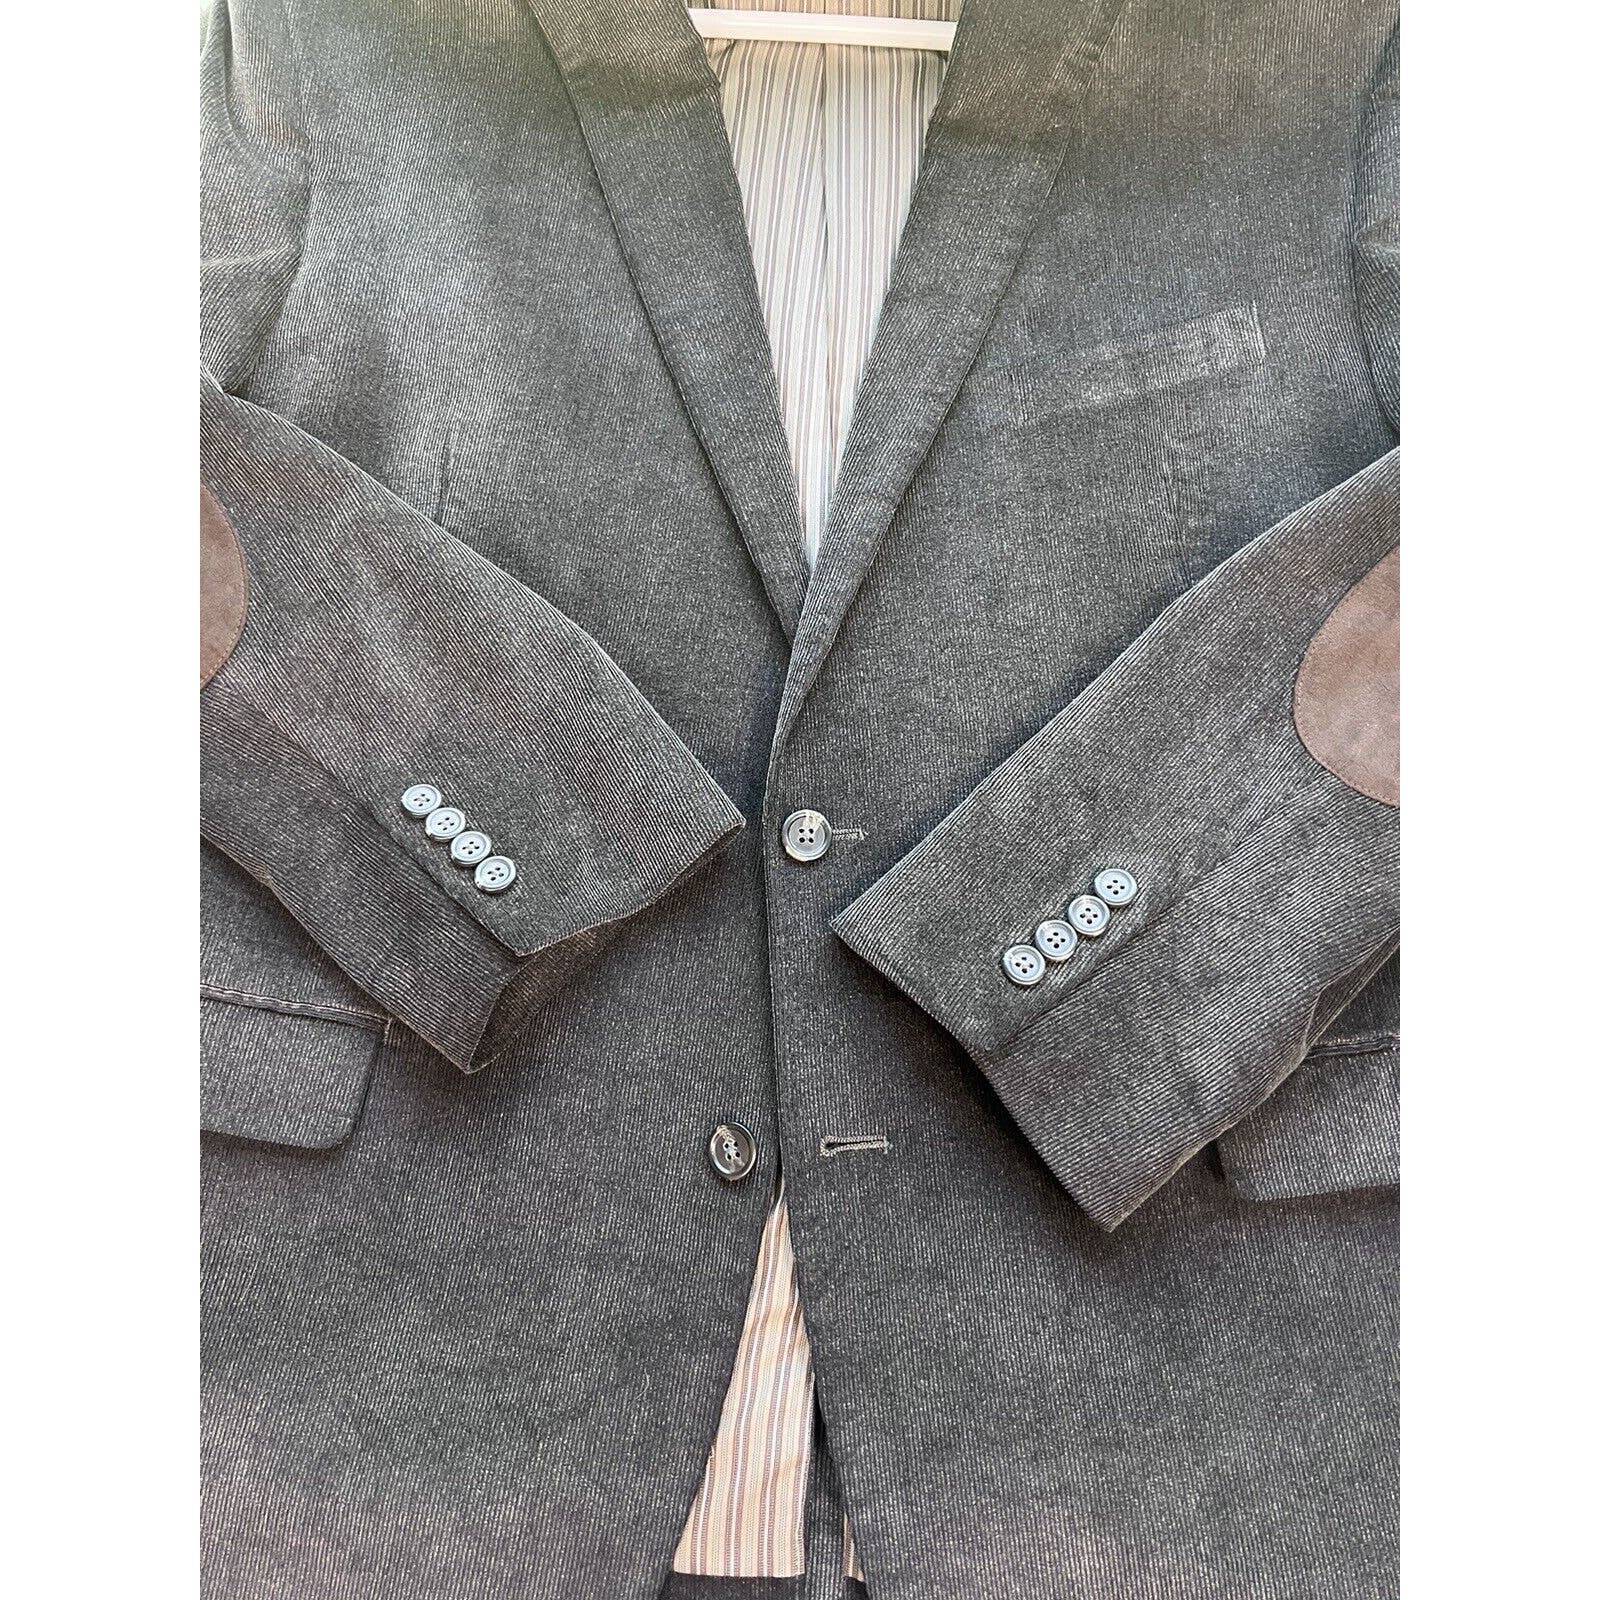 Chaps Canfield 2 Button Corduroy Sport Coat Men’s 48 R Classic Fit Gray / Brown